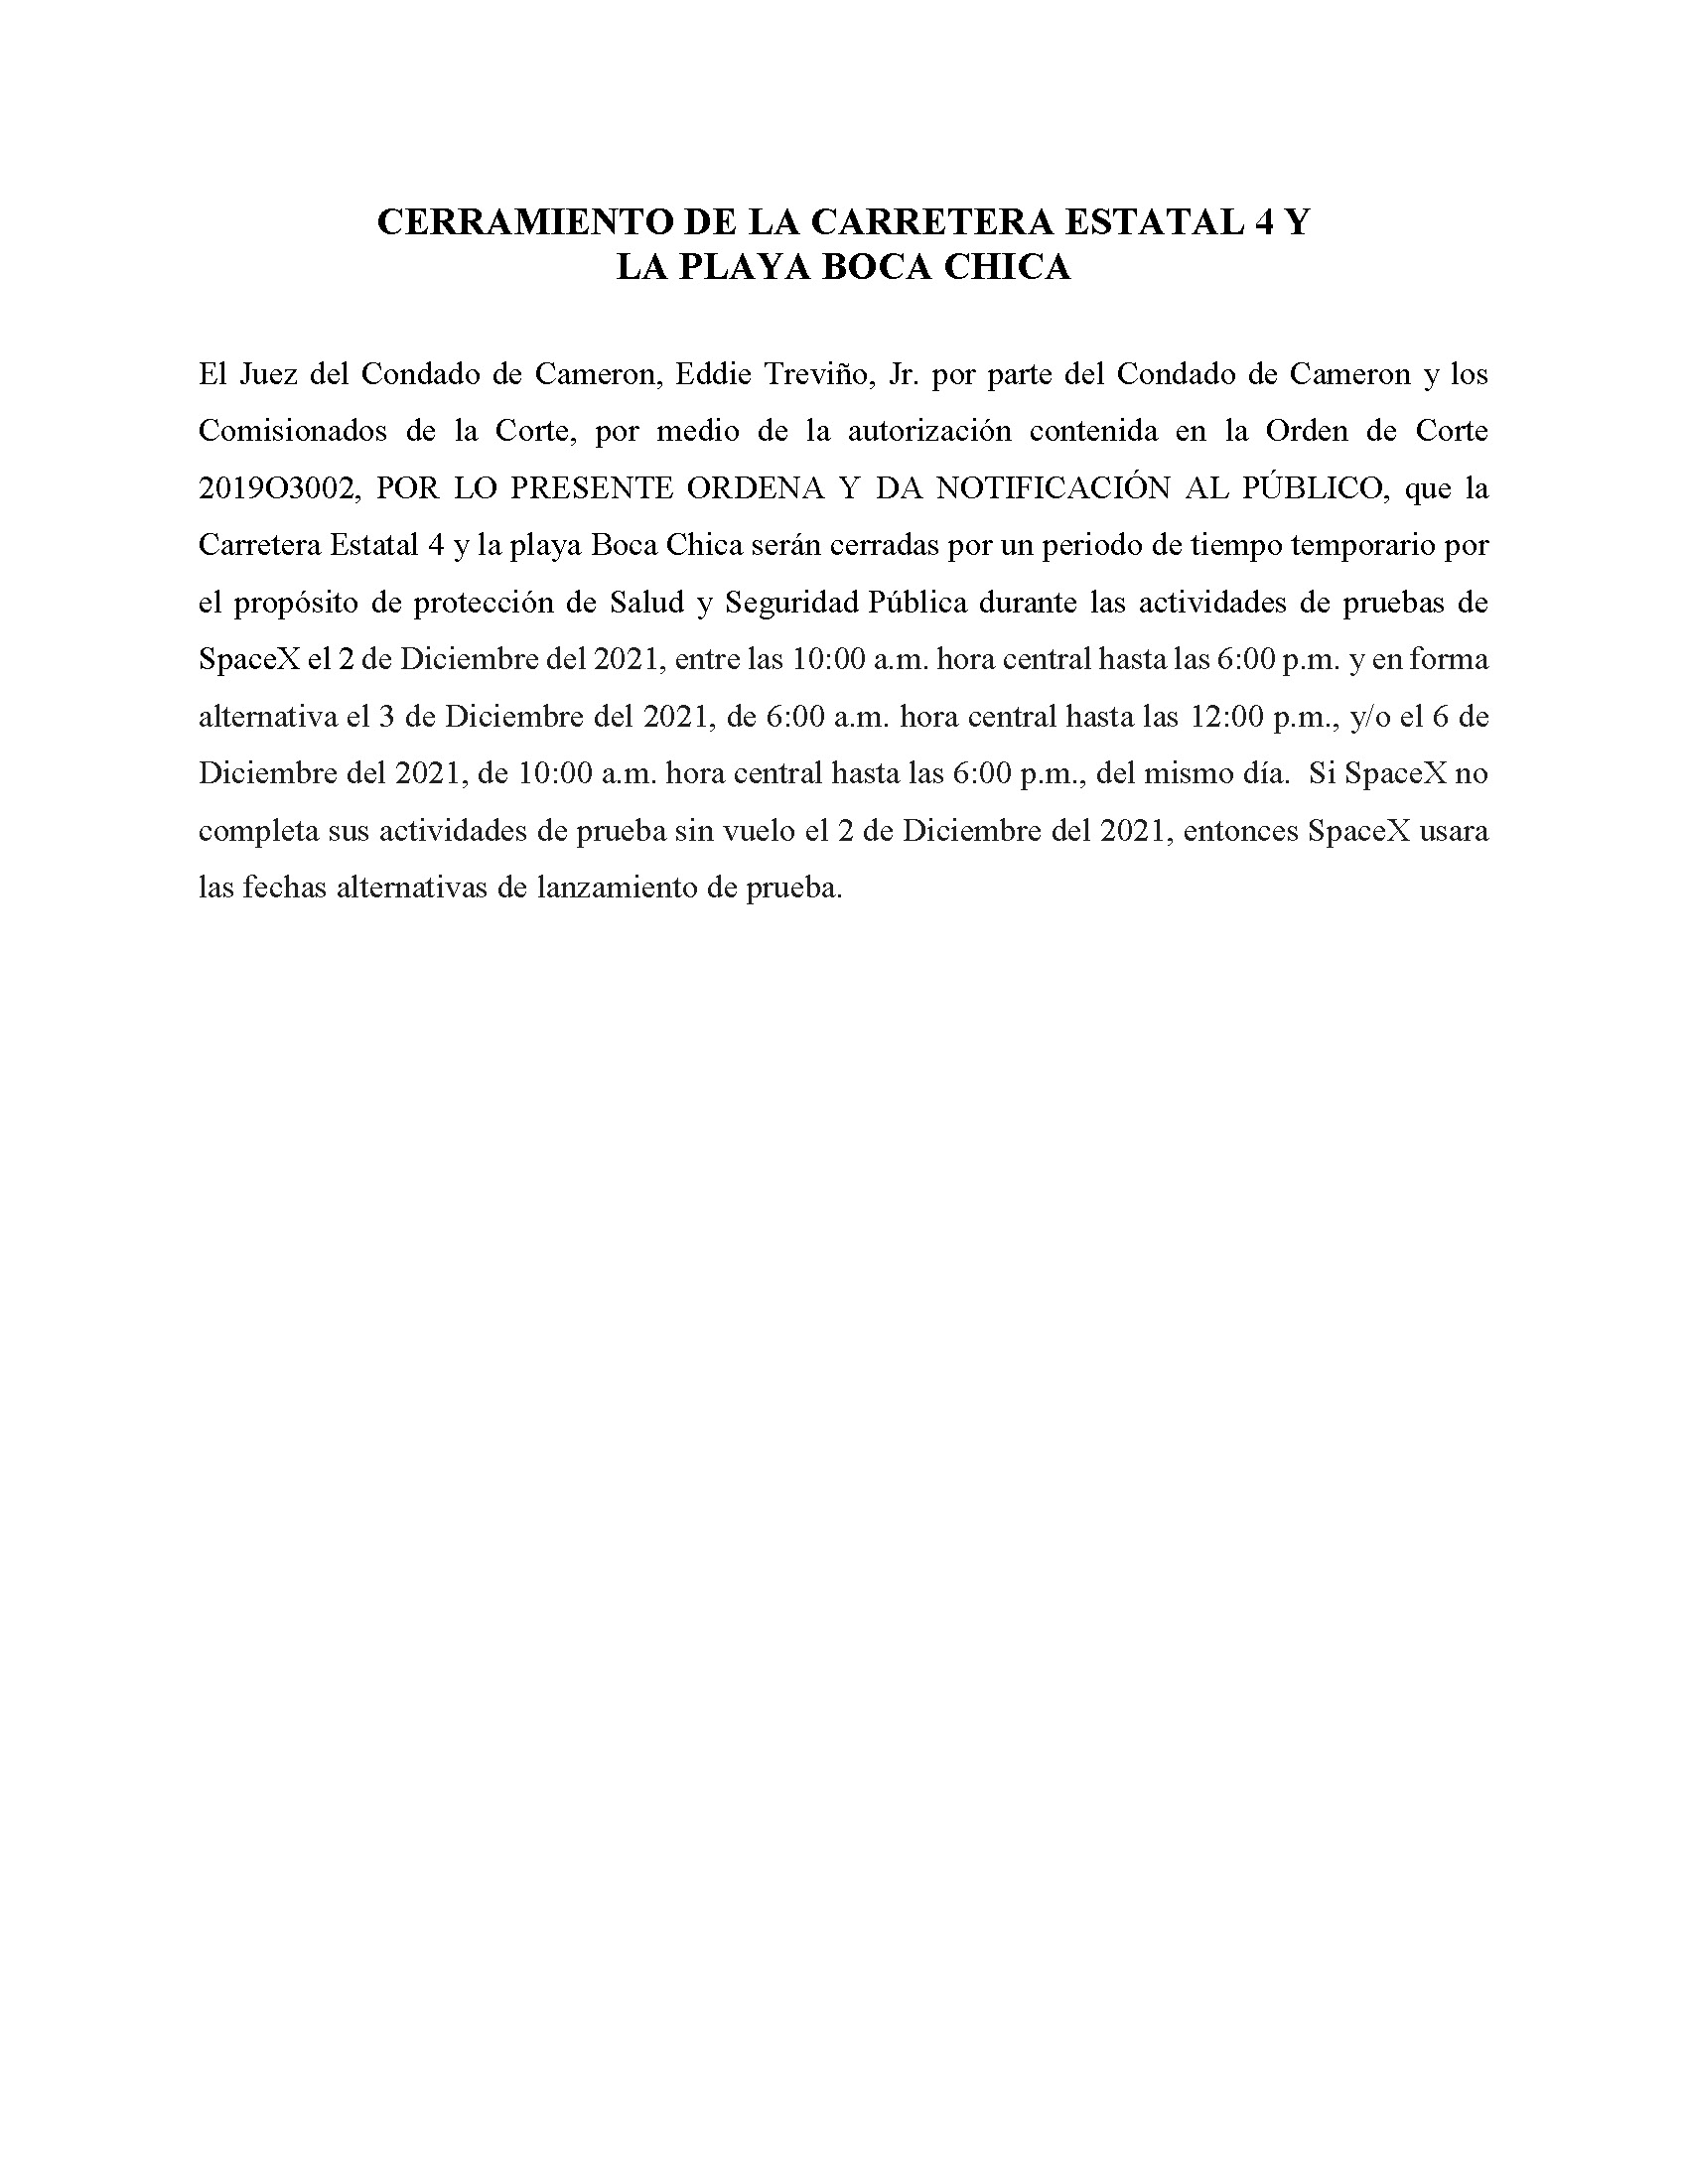 ORDER.CLOSURE OF HIGHWAY 4 Y LA PLAYA BOCA CHICA.SPANISH.12.02.2021